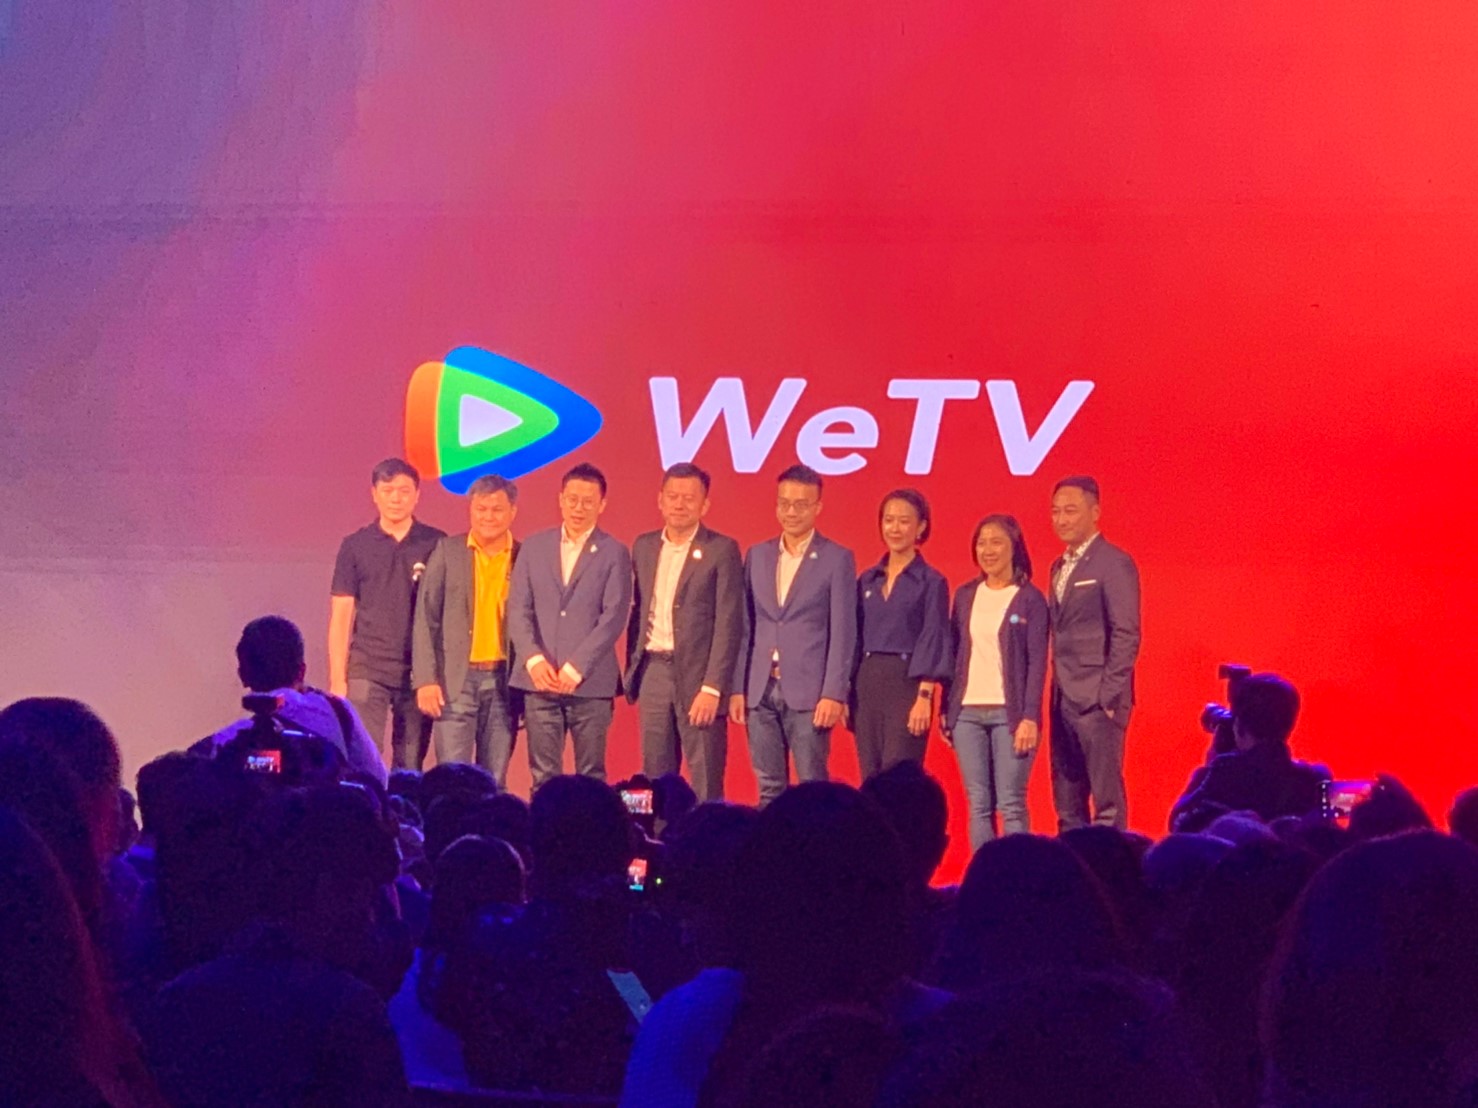 Tencent จับมือกับผู้ผลิตคอนเทนต์ในไทย เอาใจคอซีรี่ส์เปิดแพลตฟอร์มใหม่ WeTV